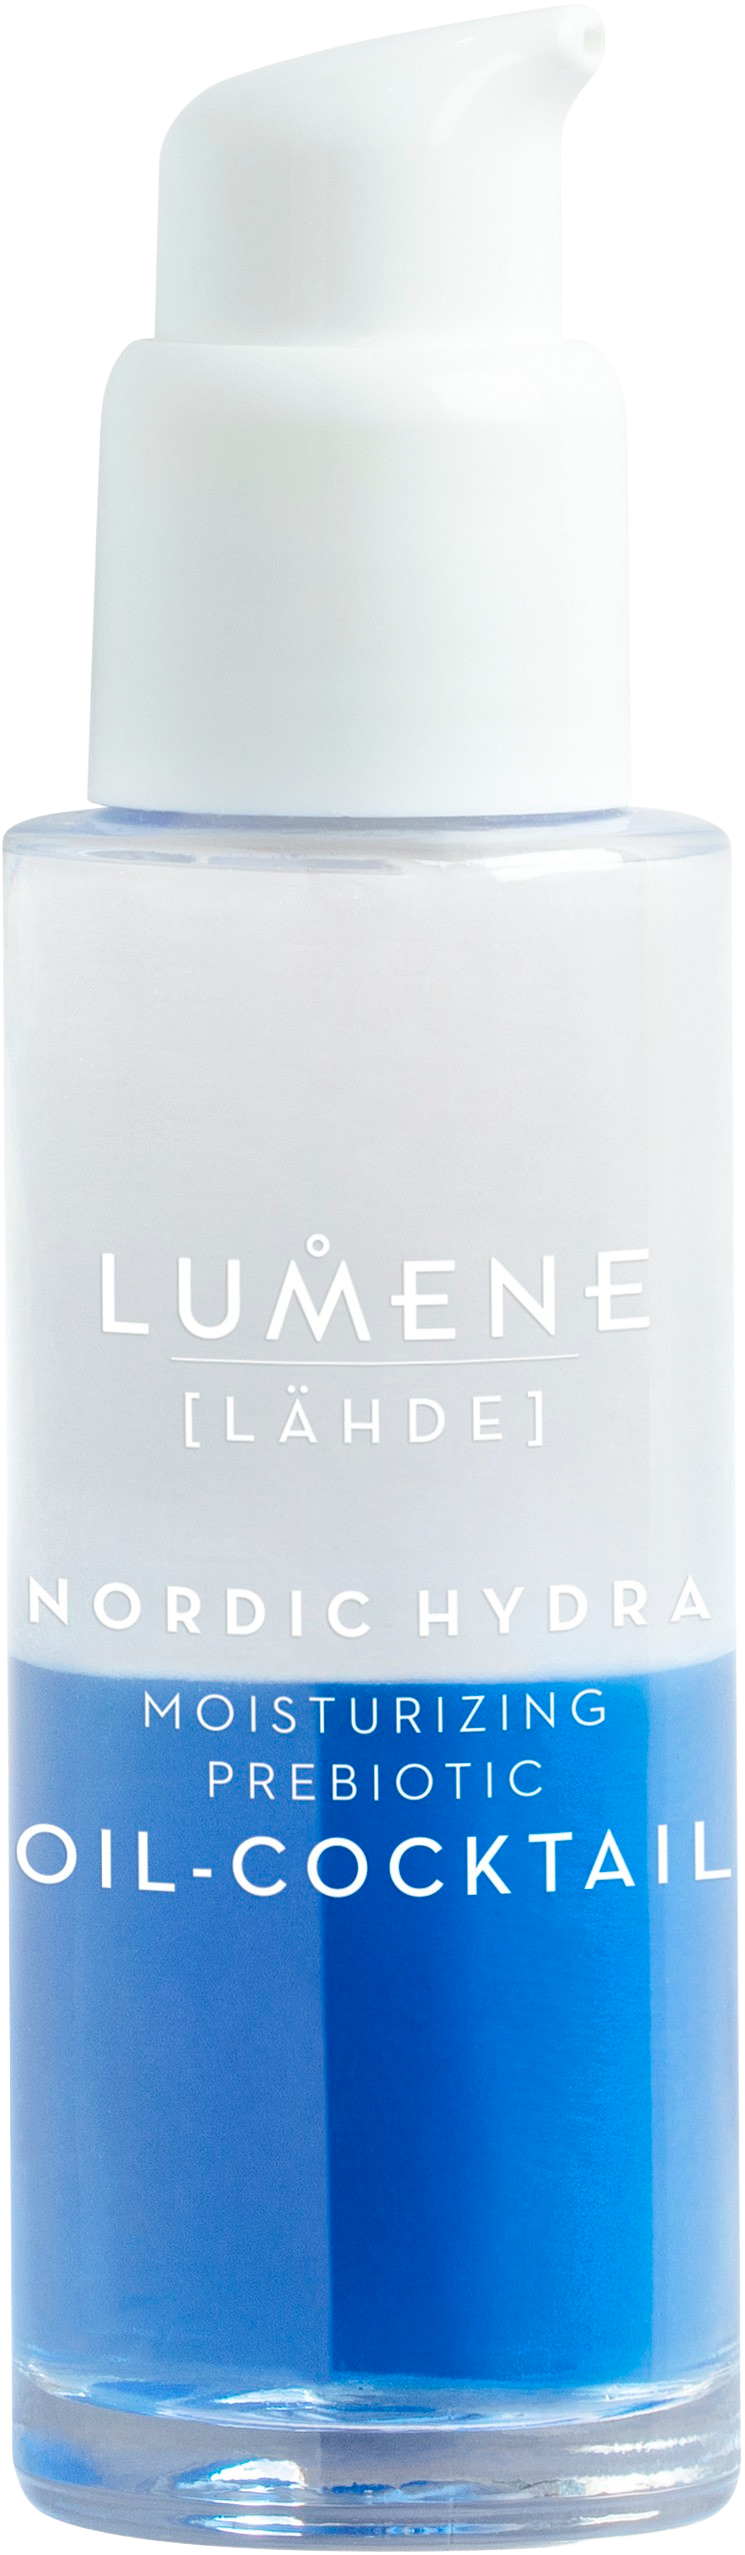 Lumene Nordic Hydra Lähde Moisturizing Prebiotic Oil-Cocktail 30 ml